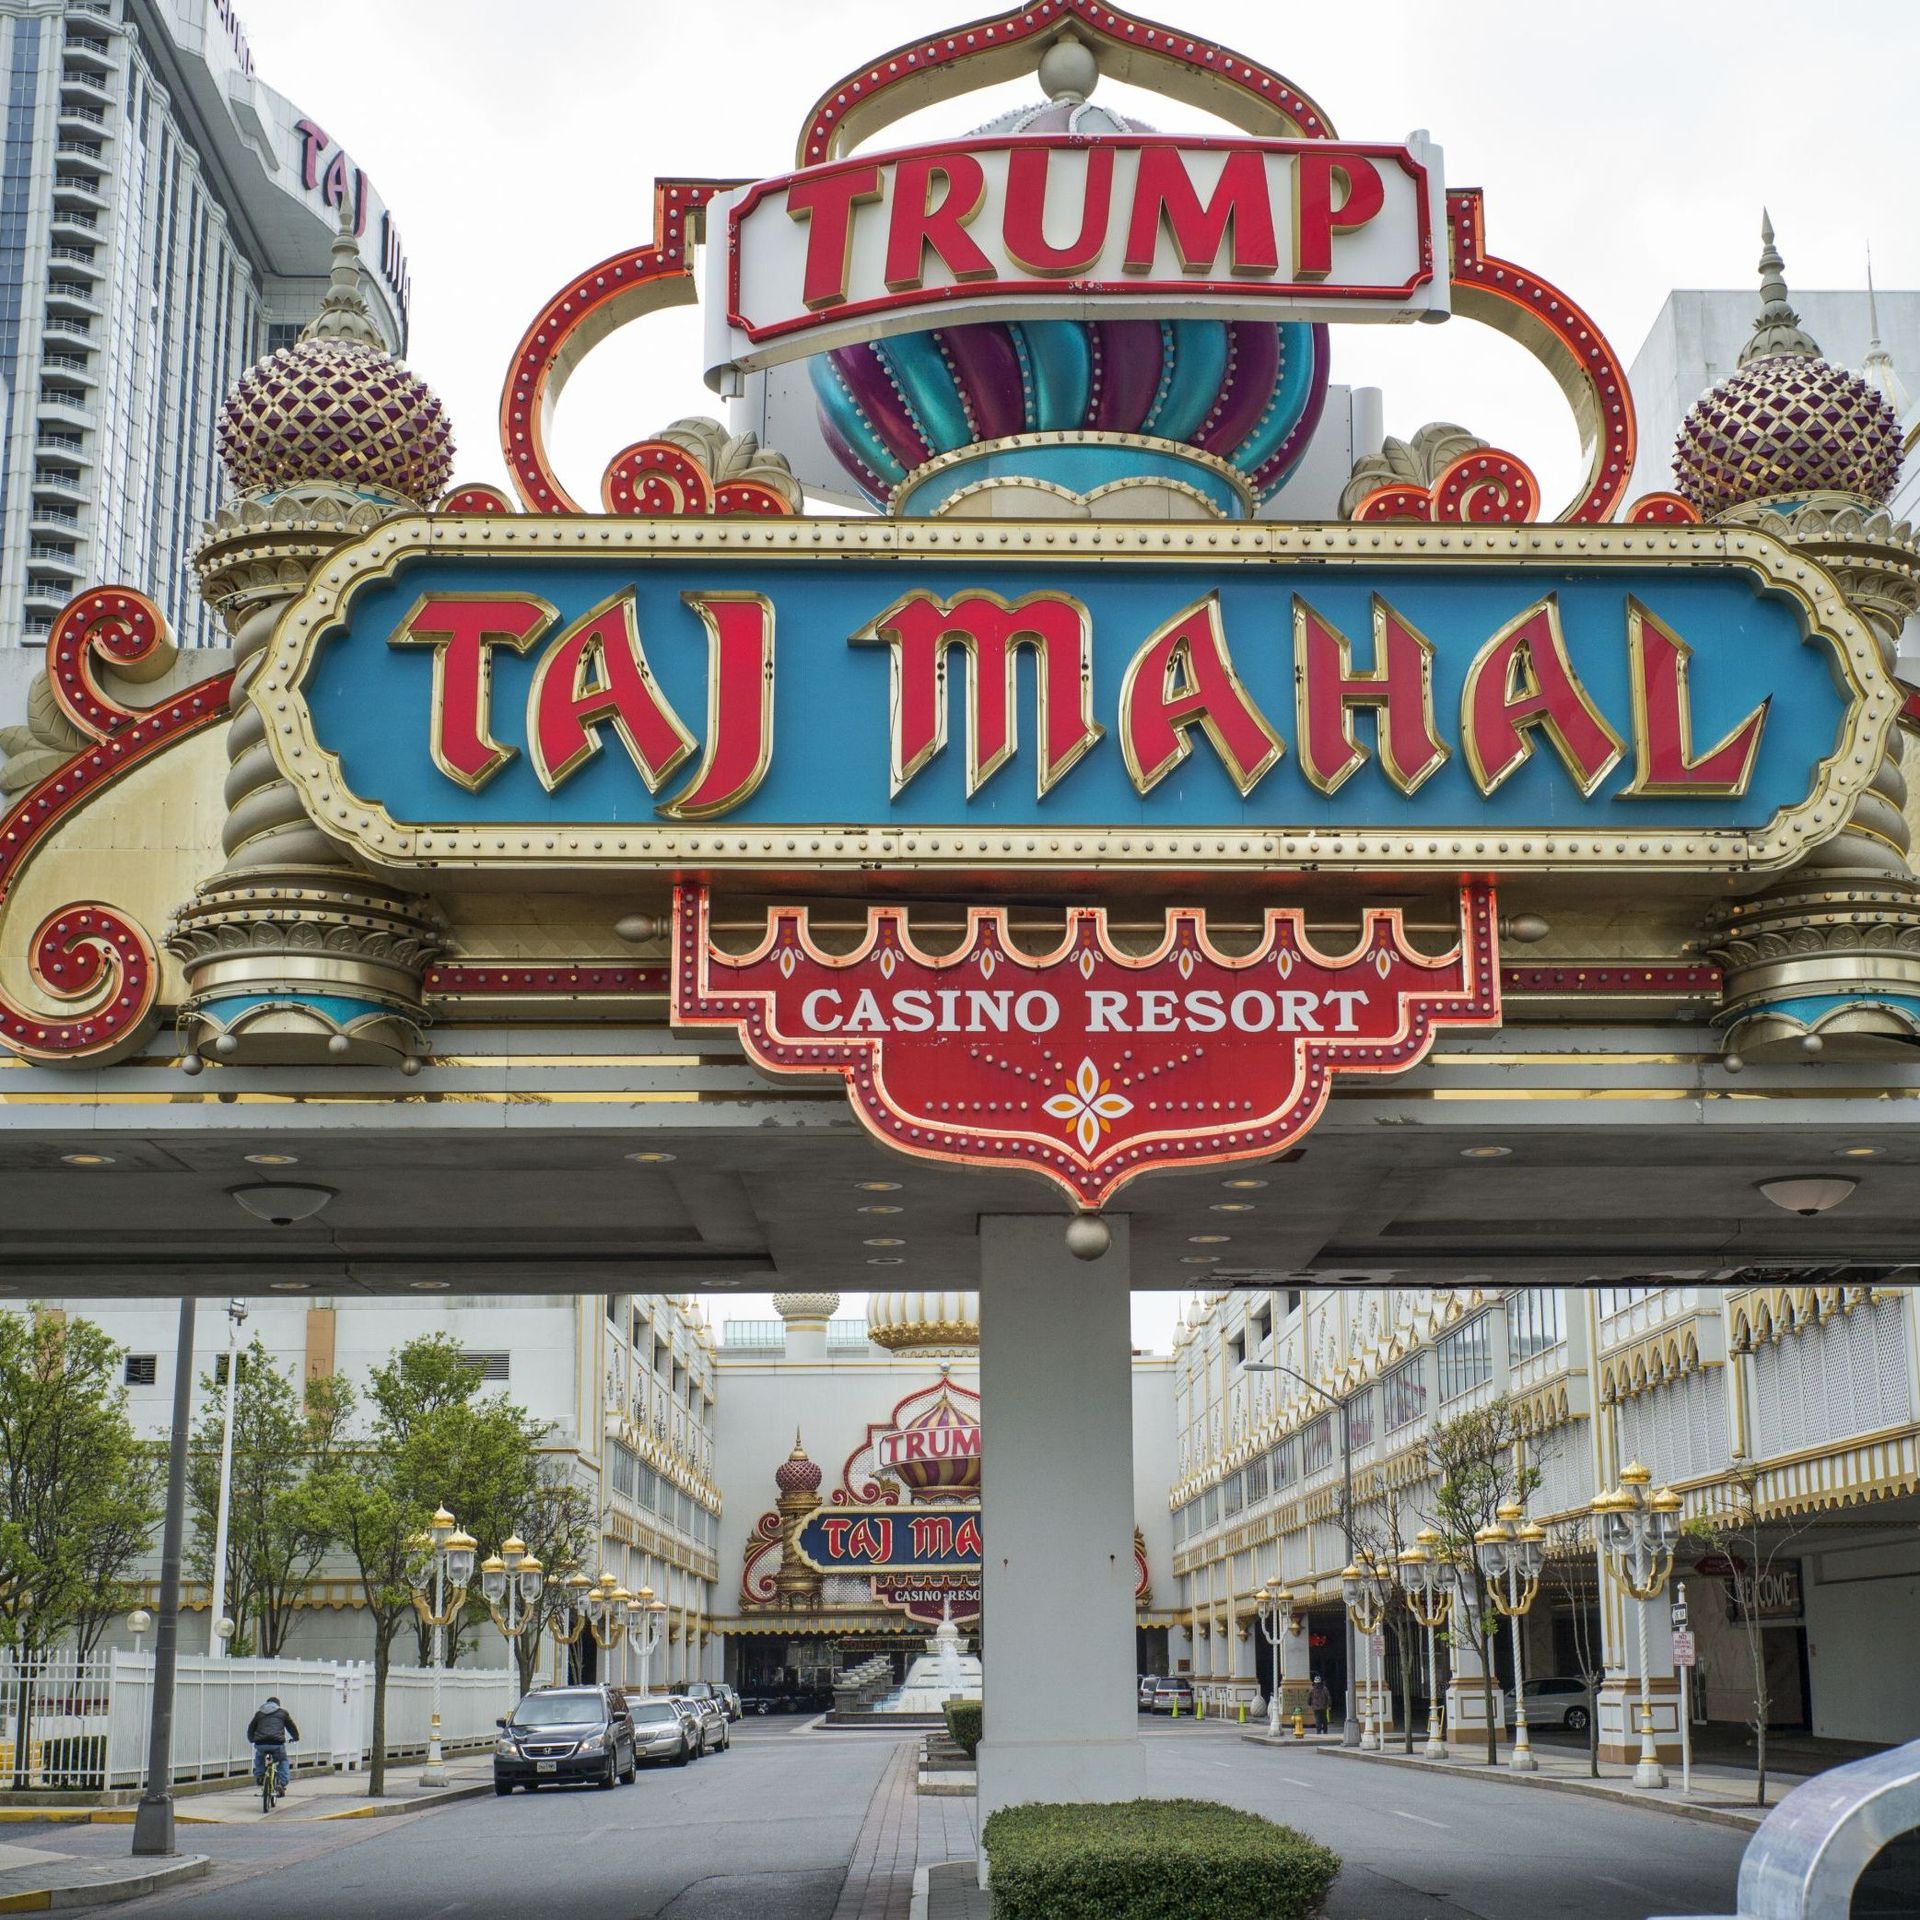 Casino Trump "Taj Mahal" à Atlantic City